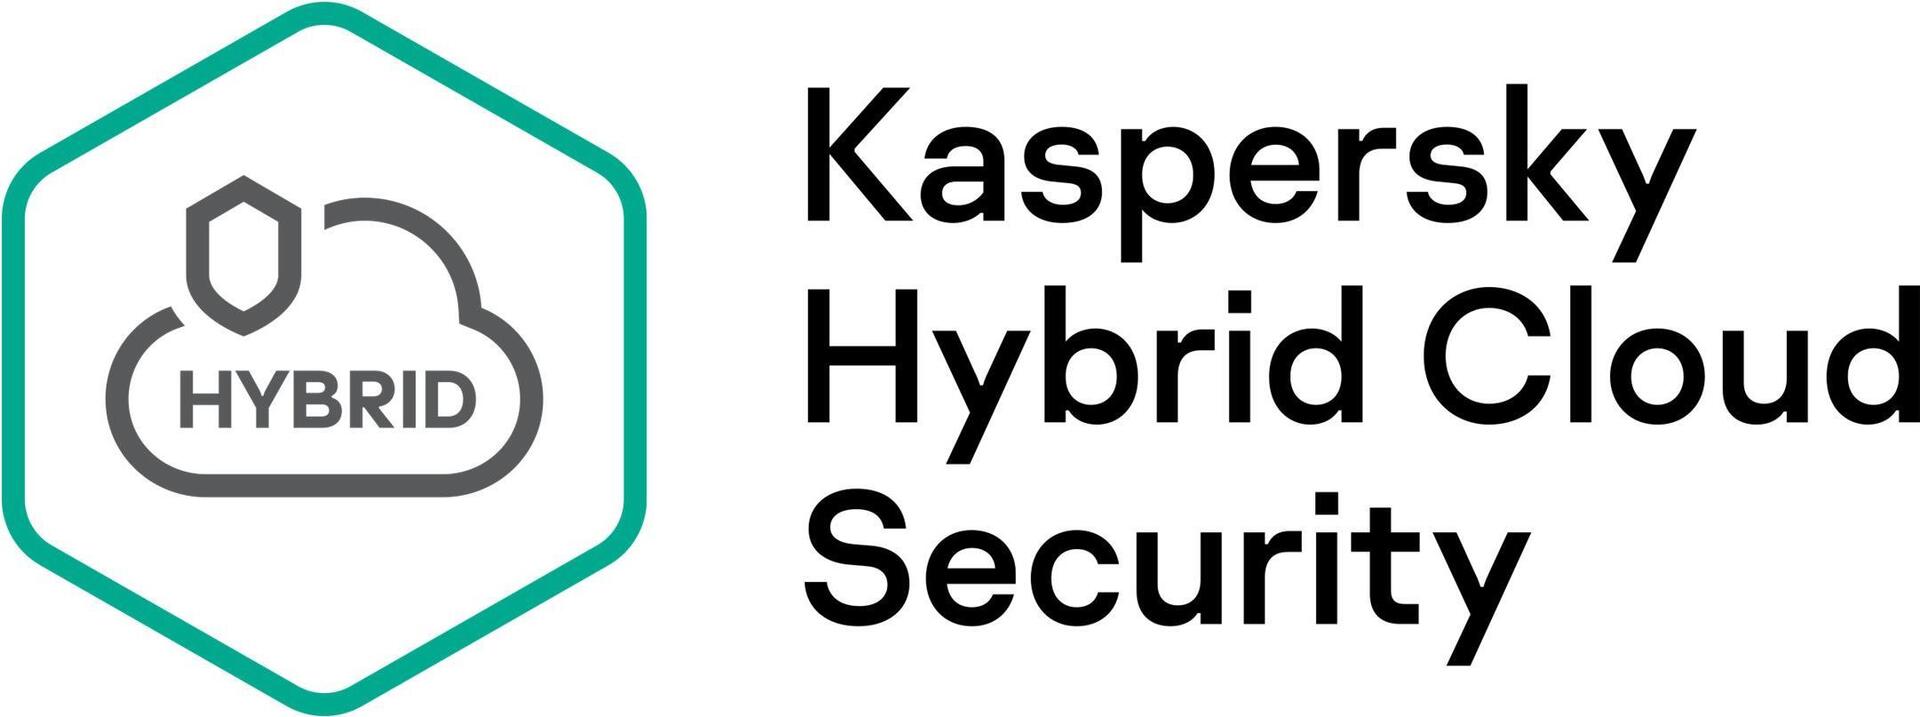 Kaspersky Hybrid Cloud Security Desktop (KL4155XAMD8)